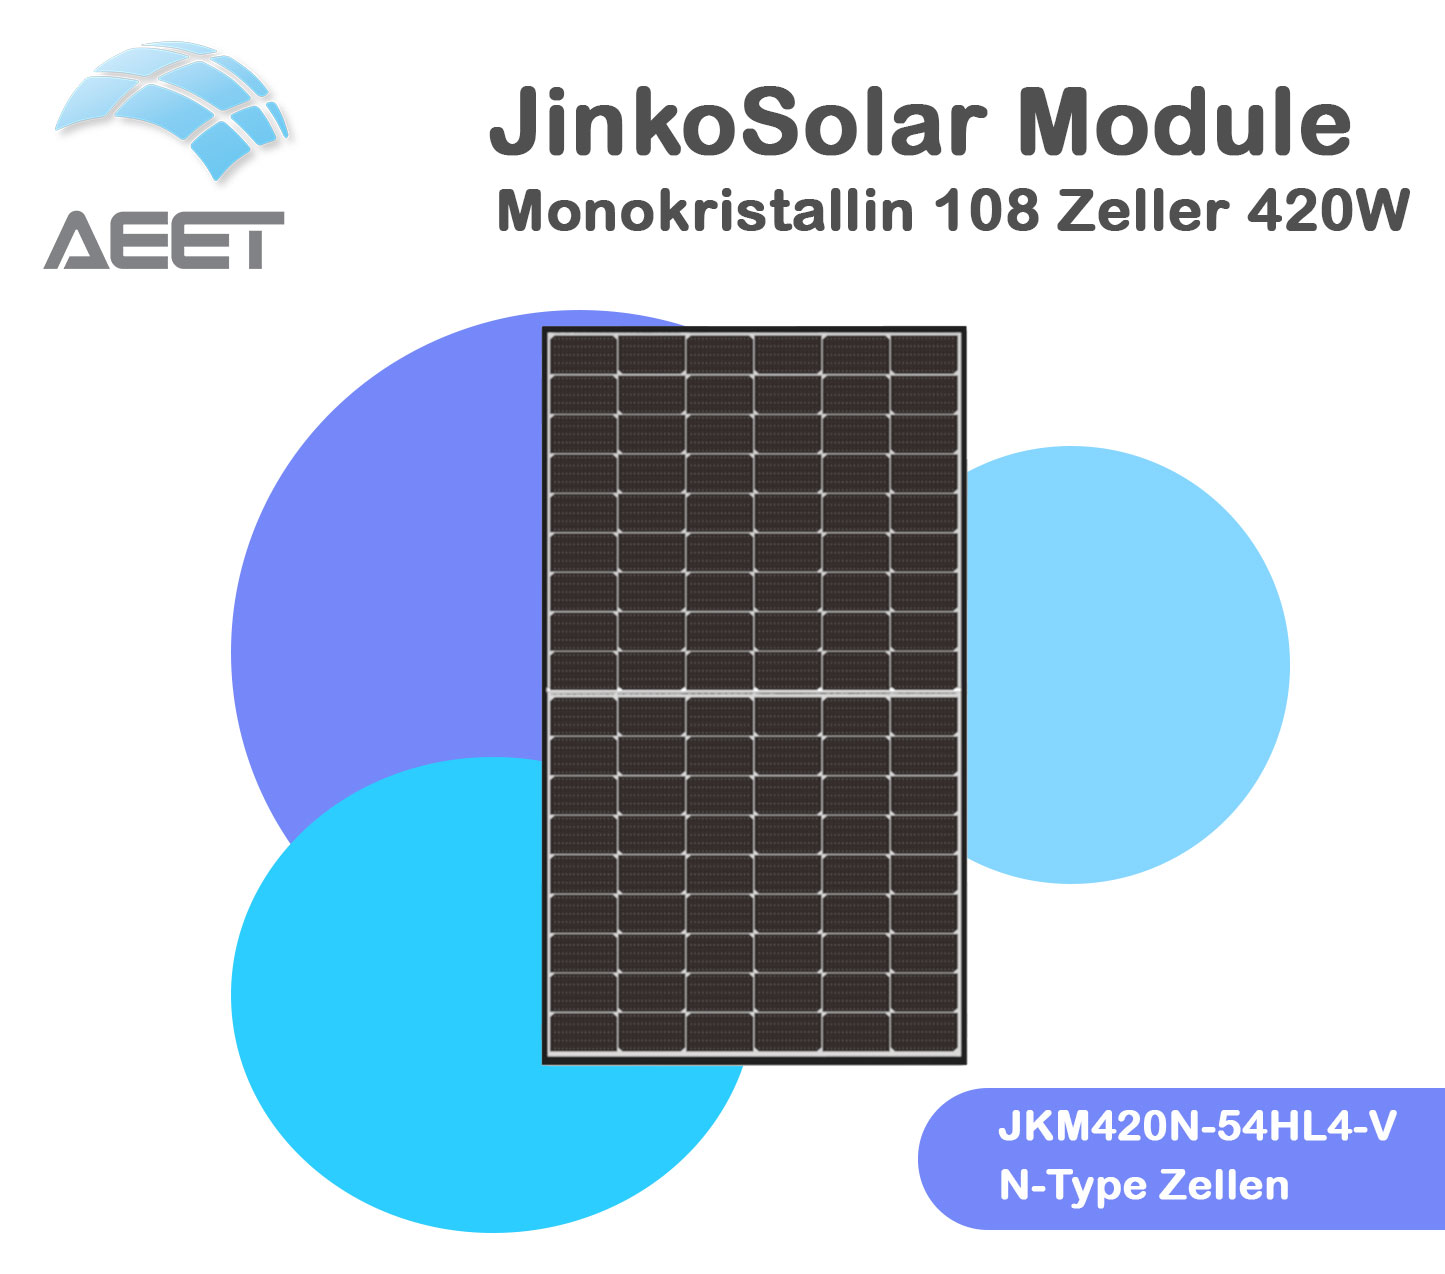 Solarmodule JinkoSolar JKM420N-54HL4-V 420 Watt